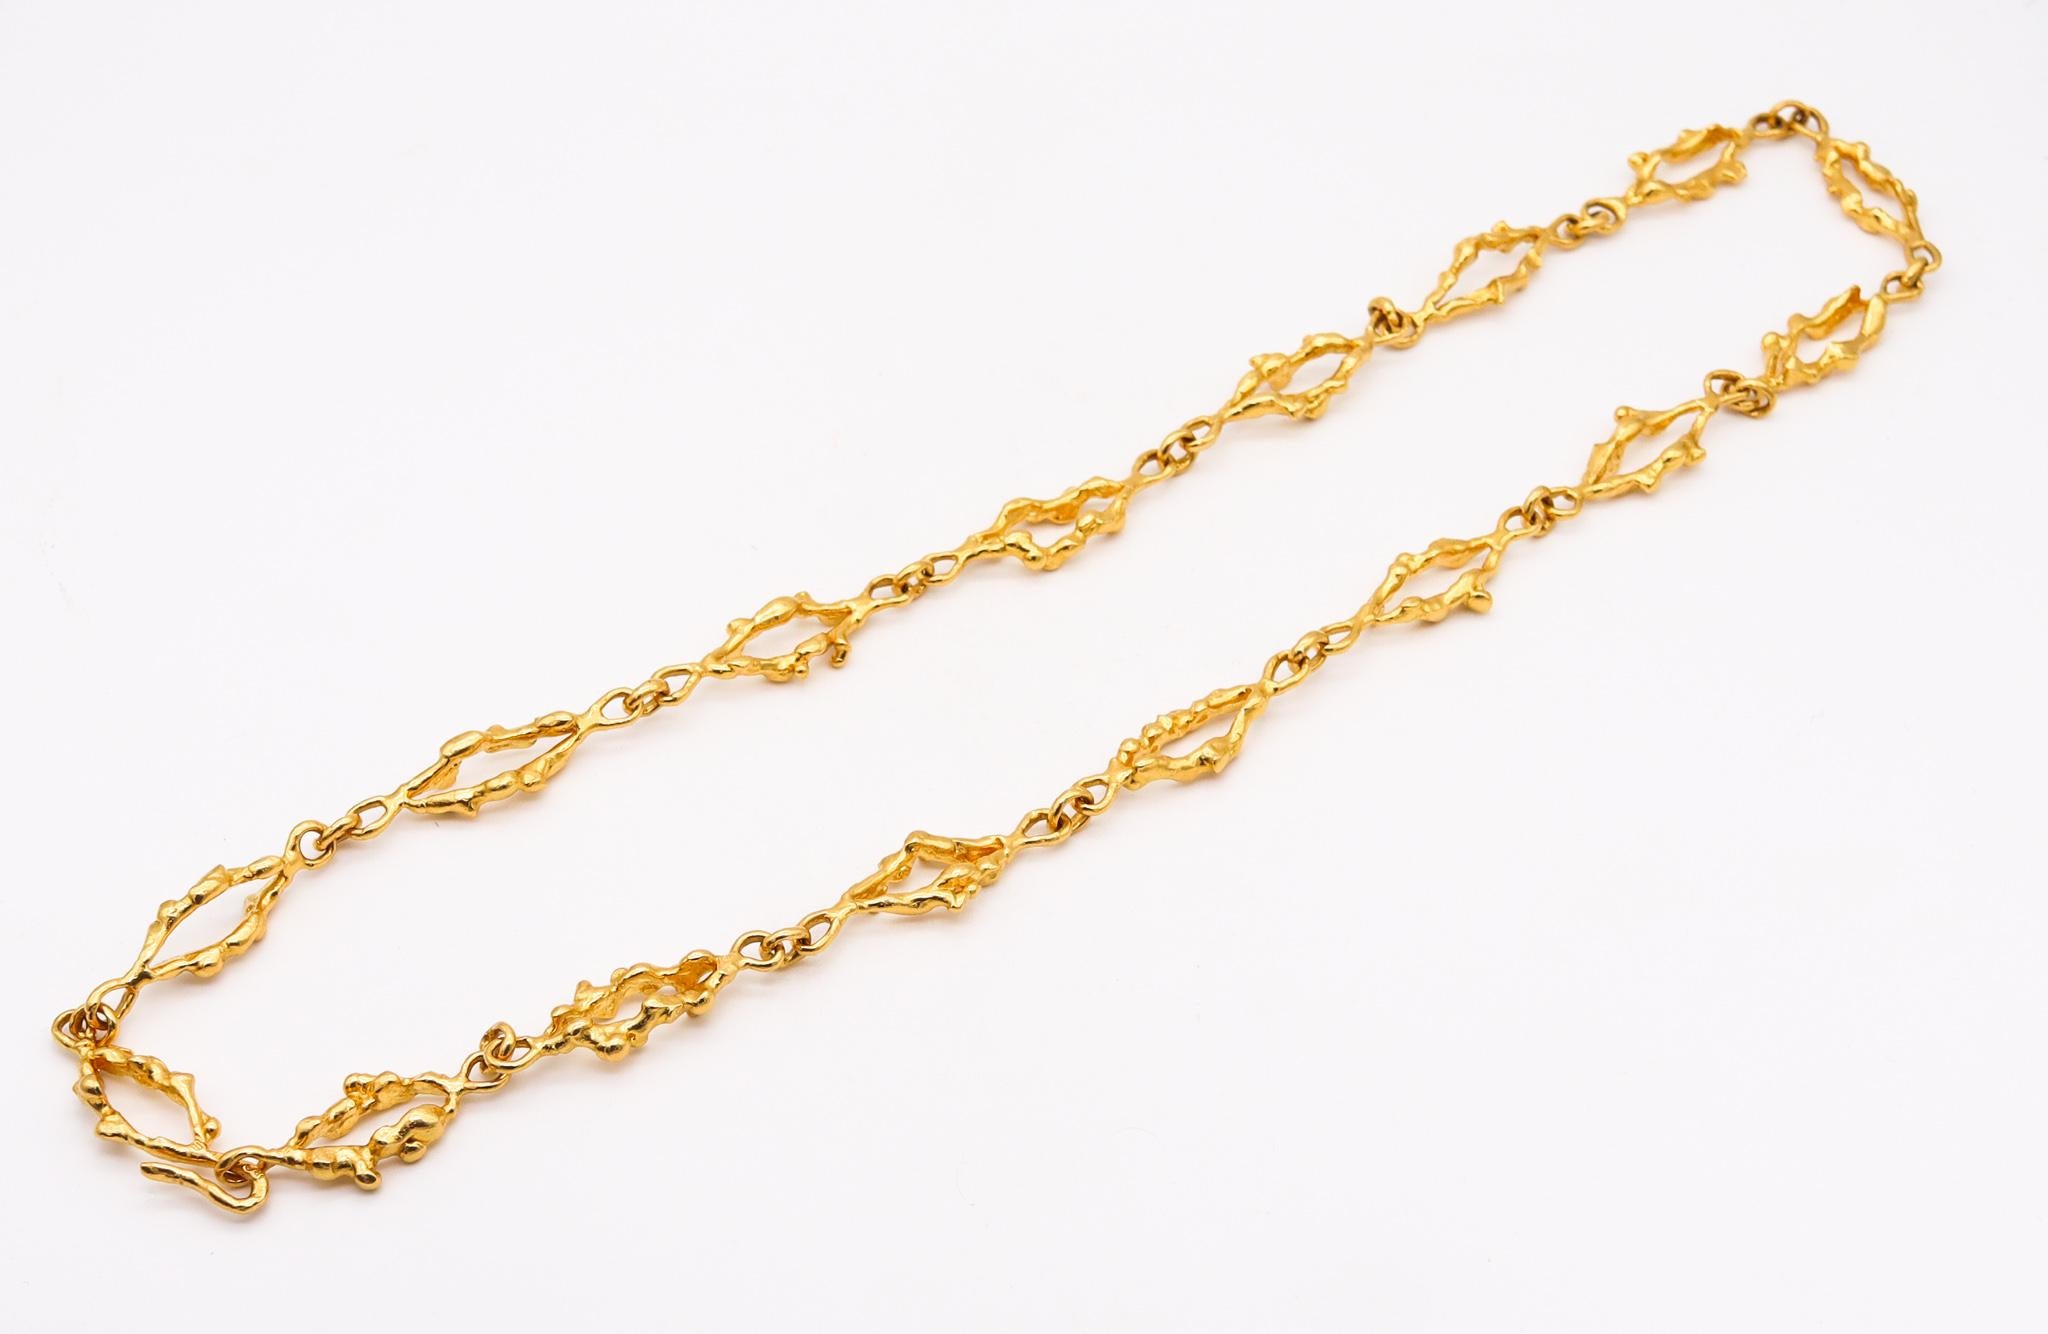 Jean Mahie 1970 Paris Rare Vintage Sautoir Necklace in Textured 22Kt Yellow Gold For Sale 3